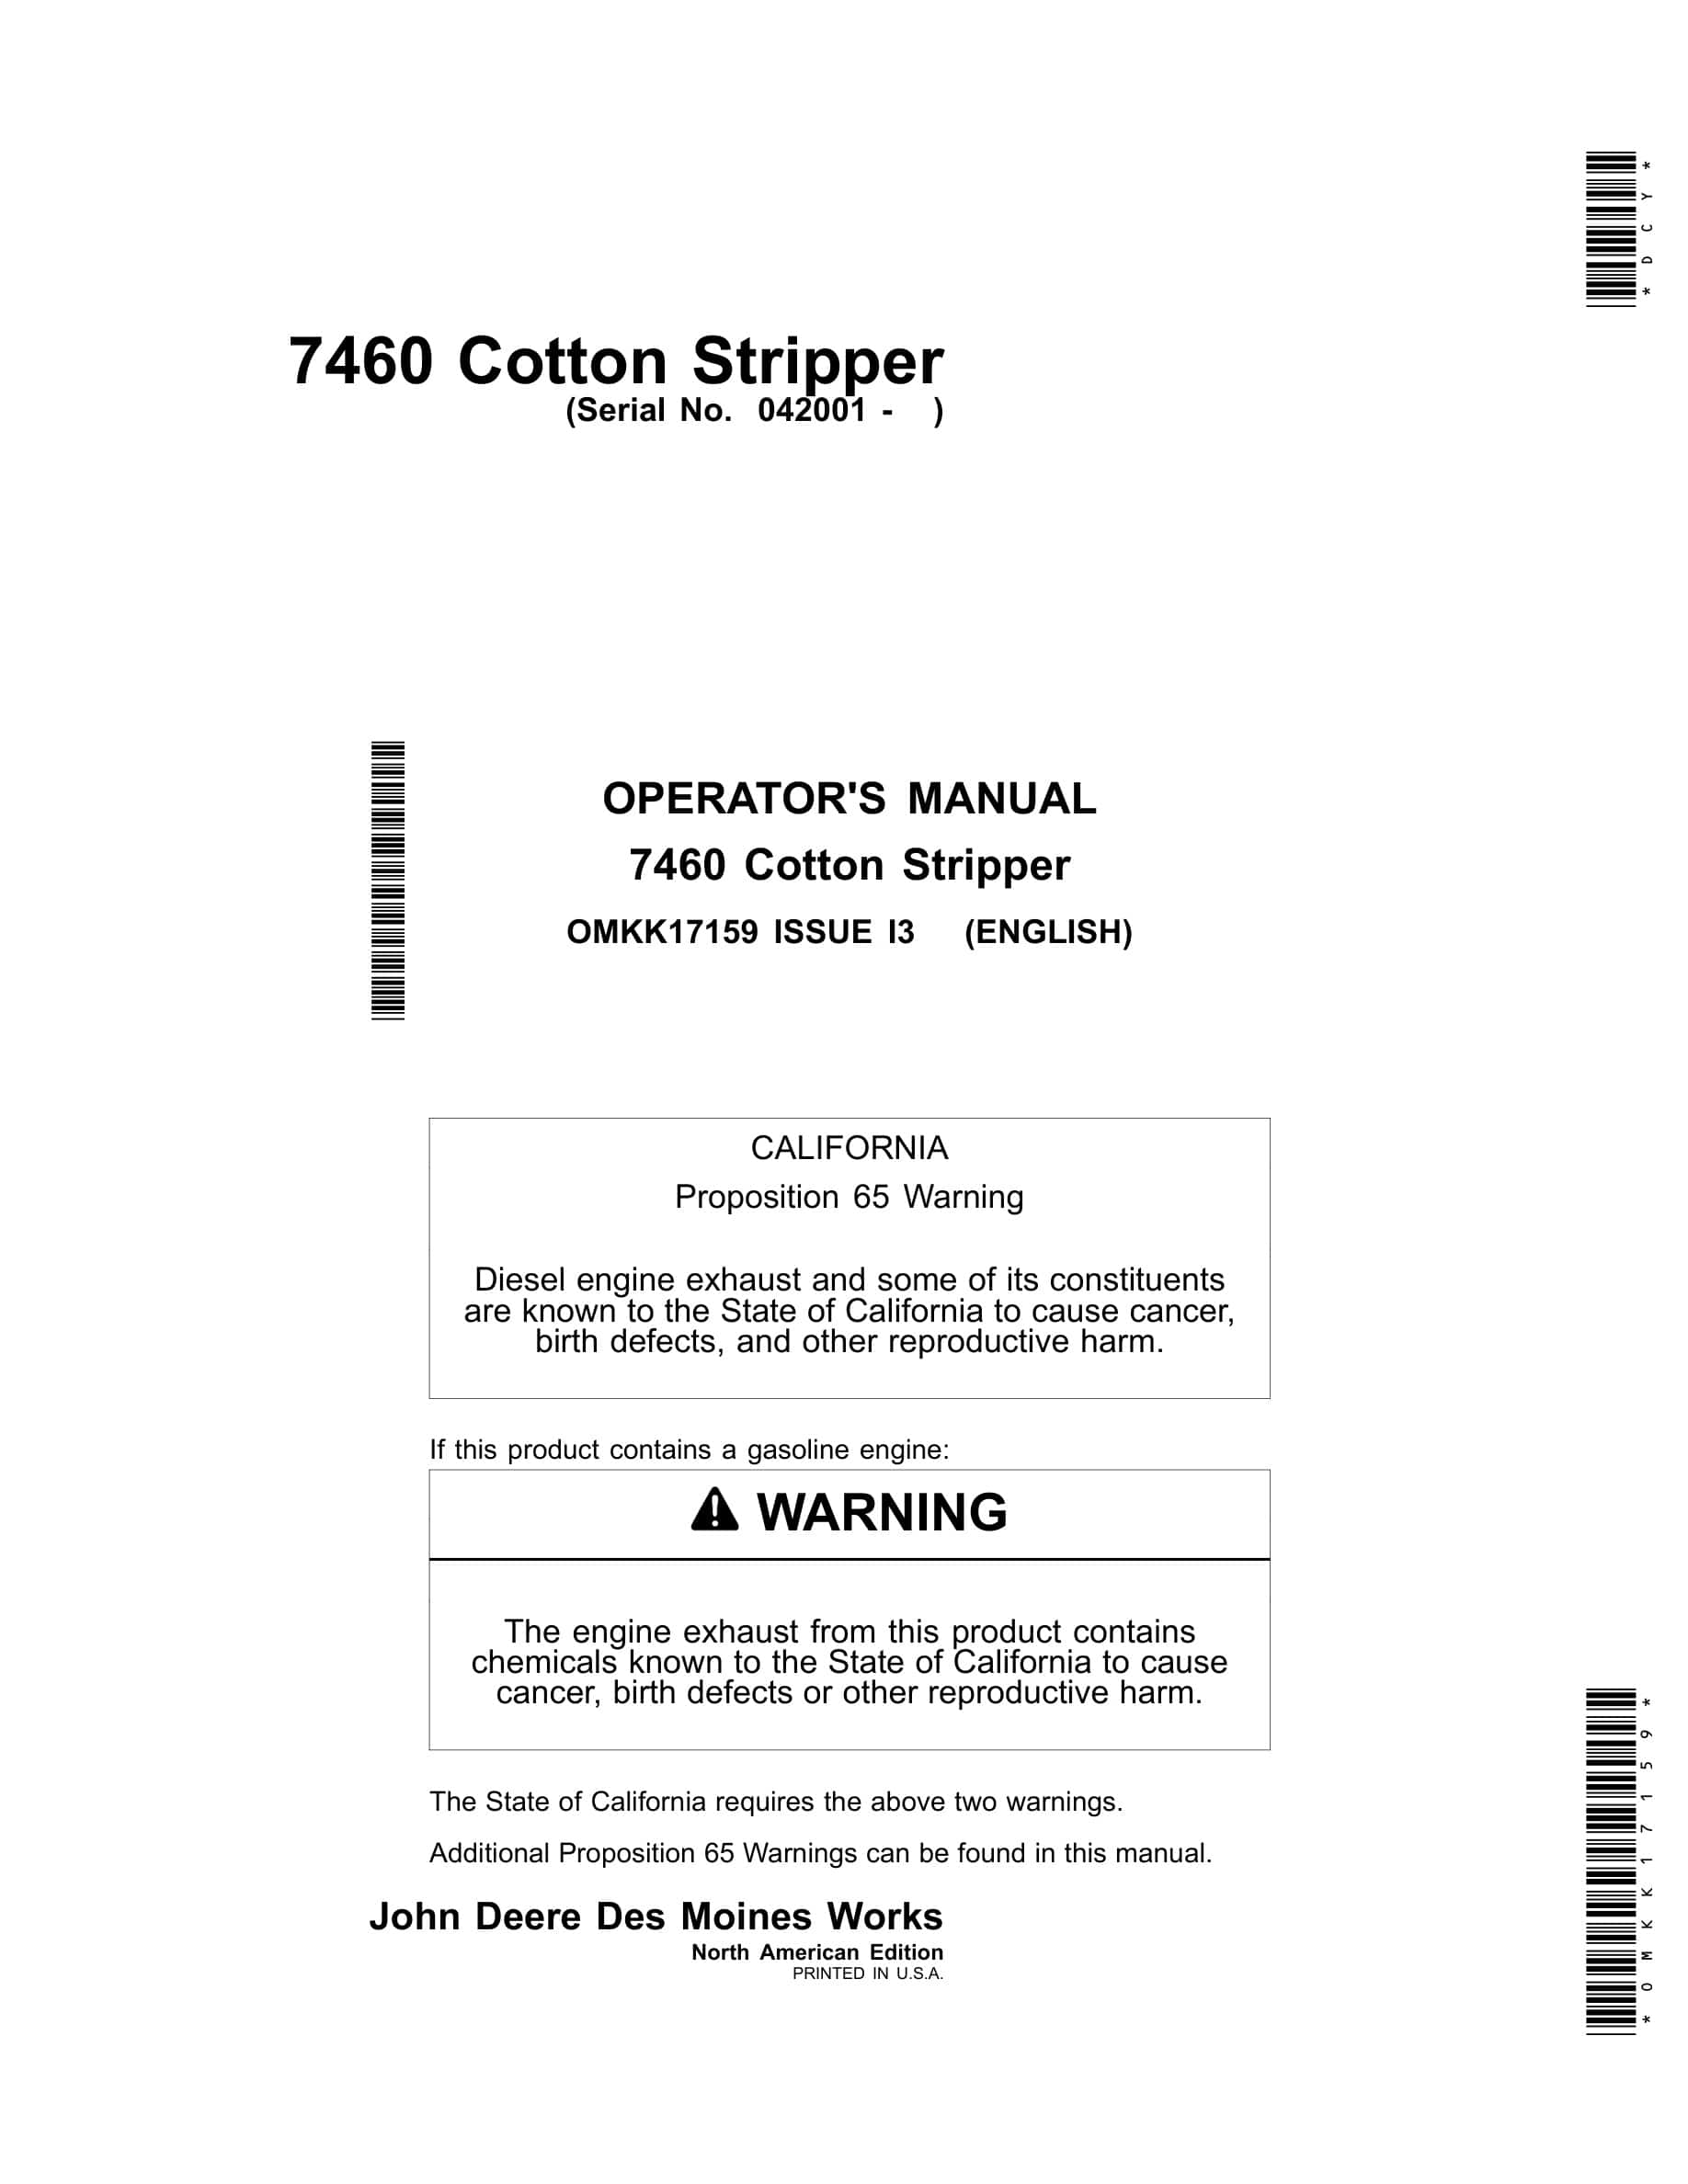 John Deere 7460 Cotton Stripper Operator Manual OMKK17159-1